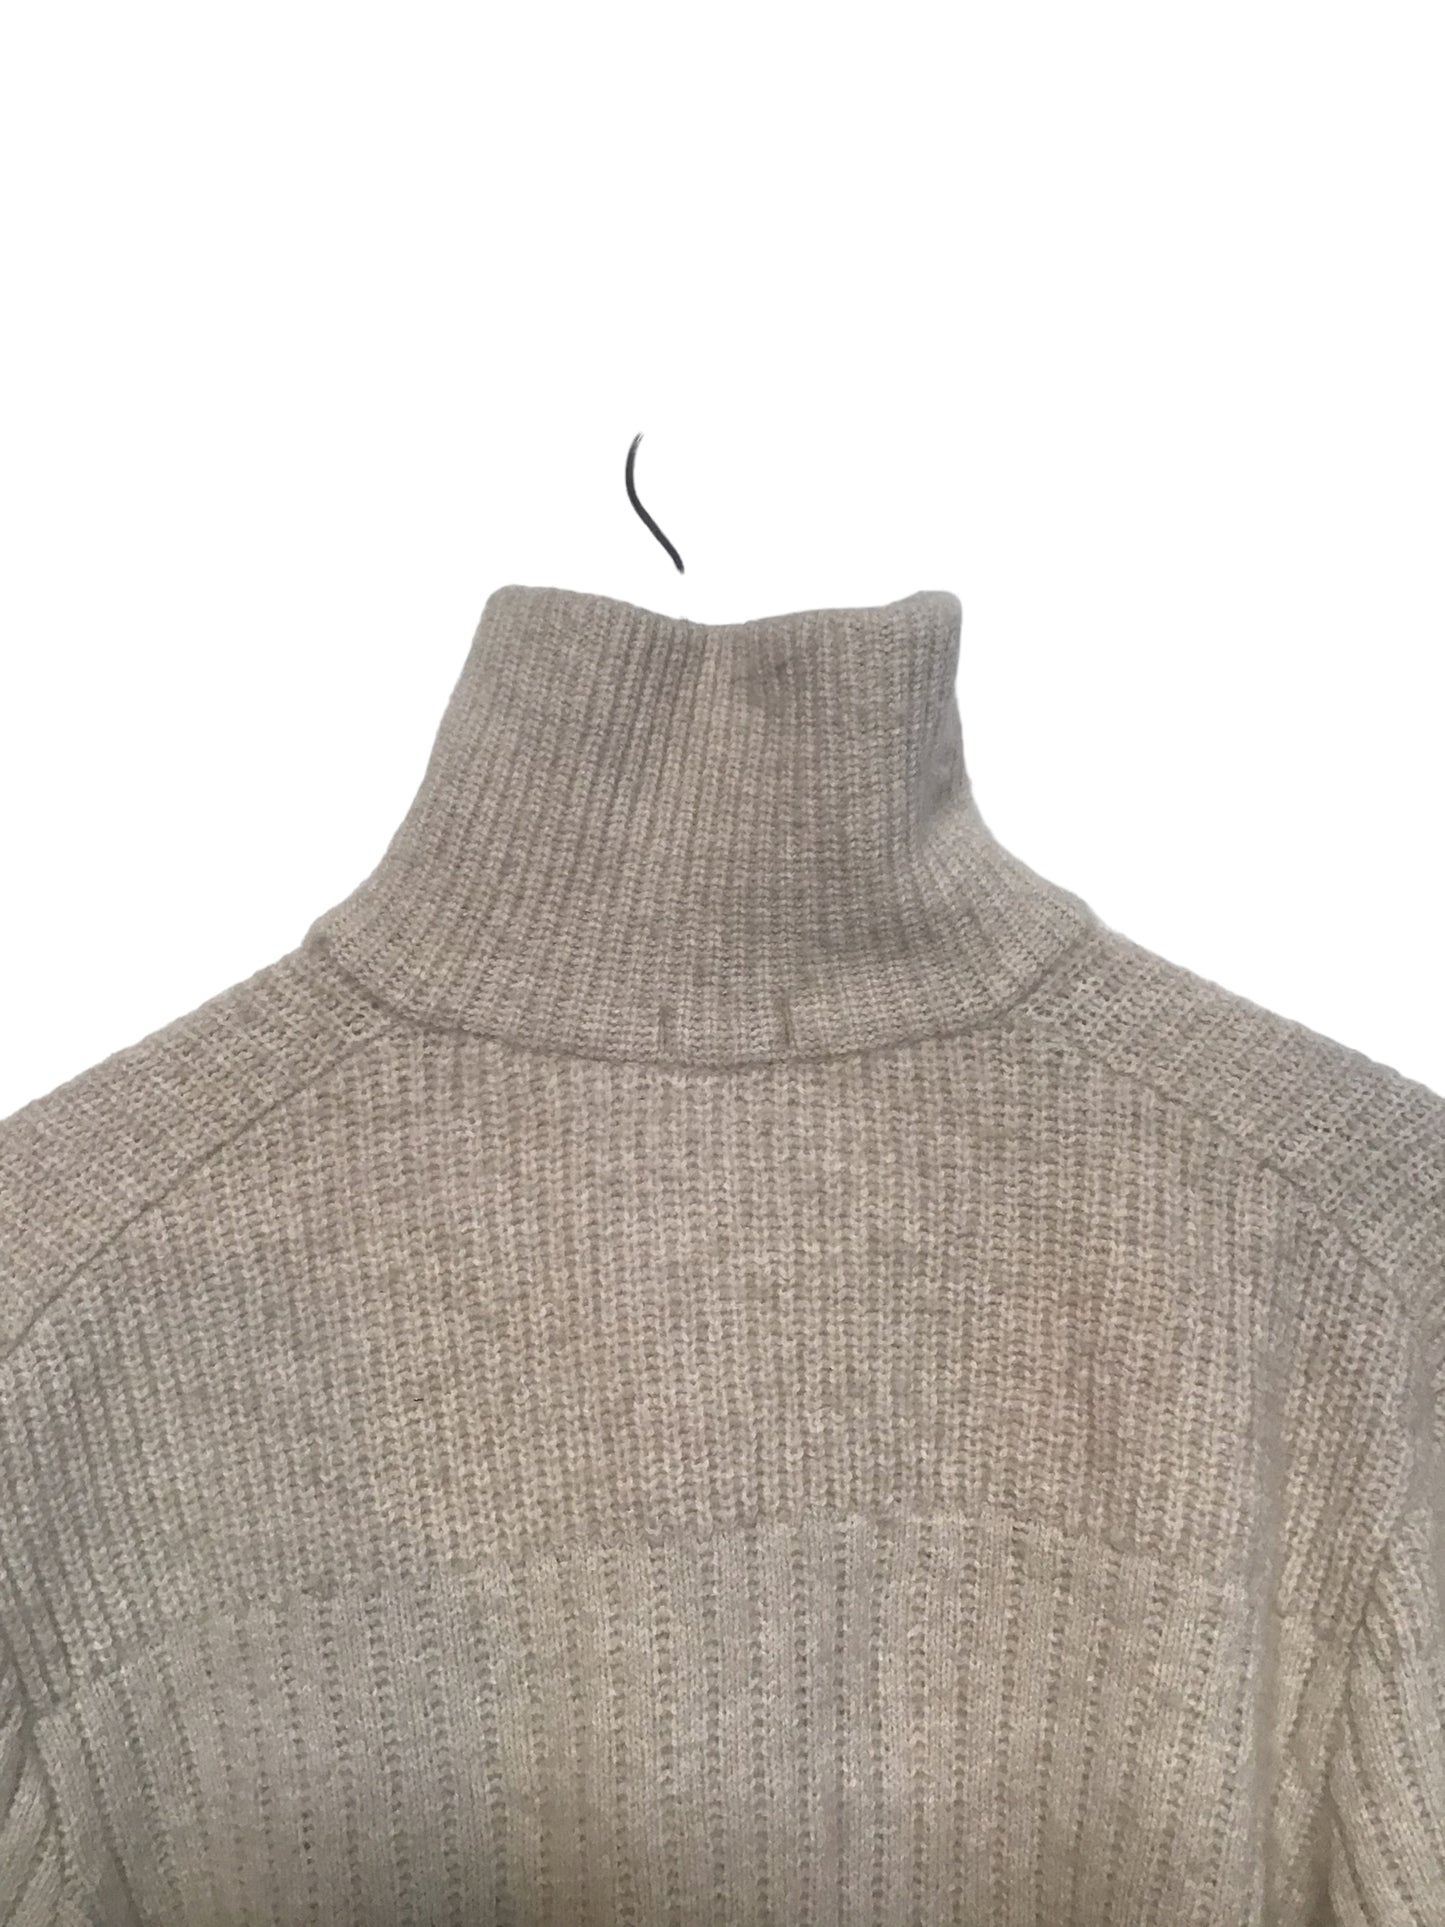 Hugo Boss Knitted Sweater (Size XL)